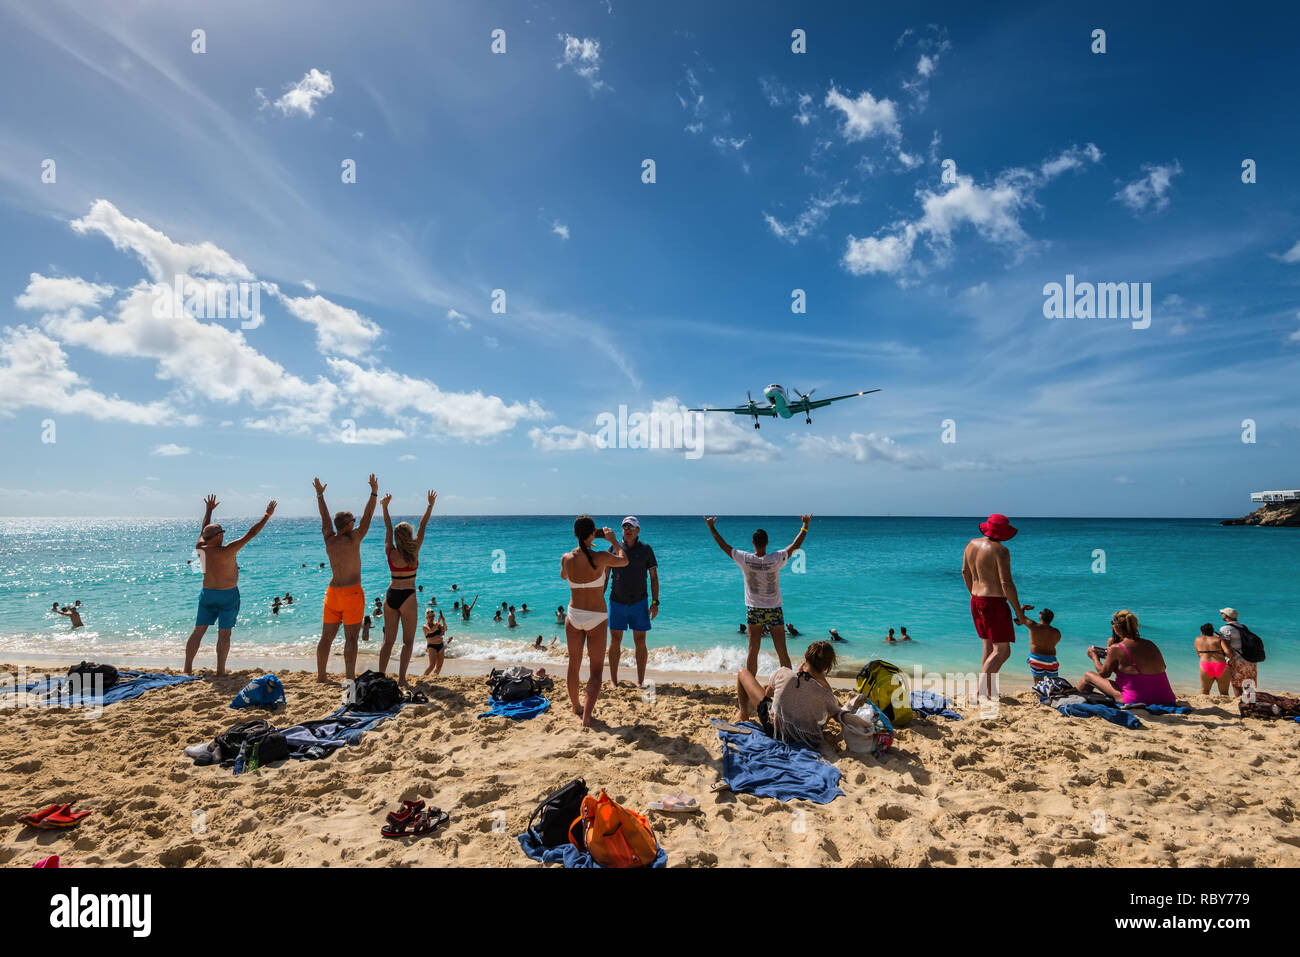 Maho beach, Saint Martin - December 17, 2018: A commercial jet approaches Princess Juliana airport above onlooking spectators. The short runway gives  Stock Photo